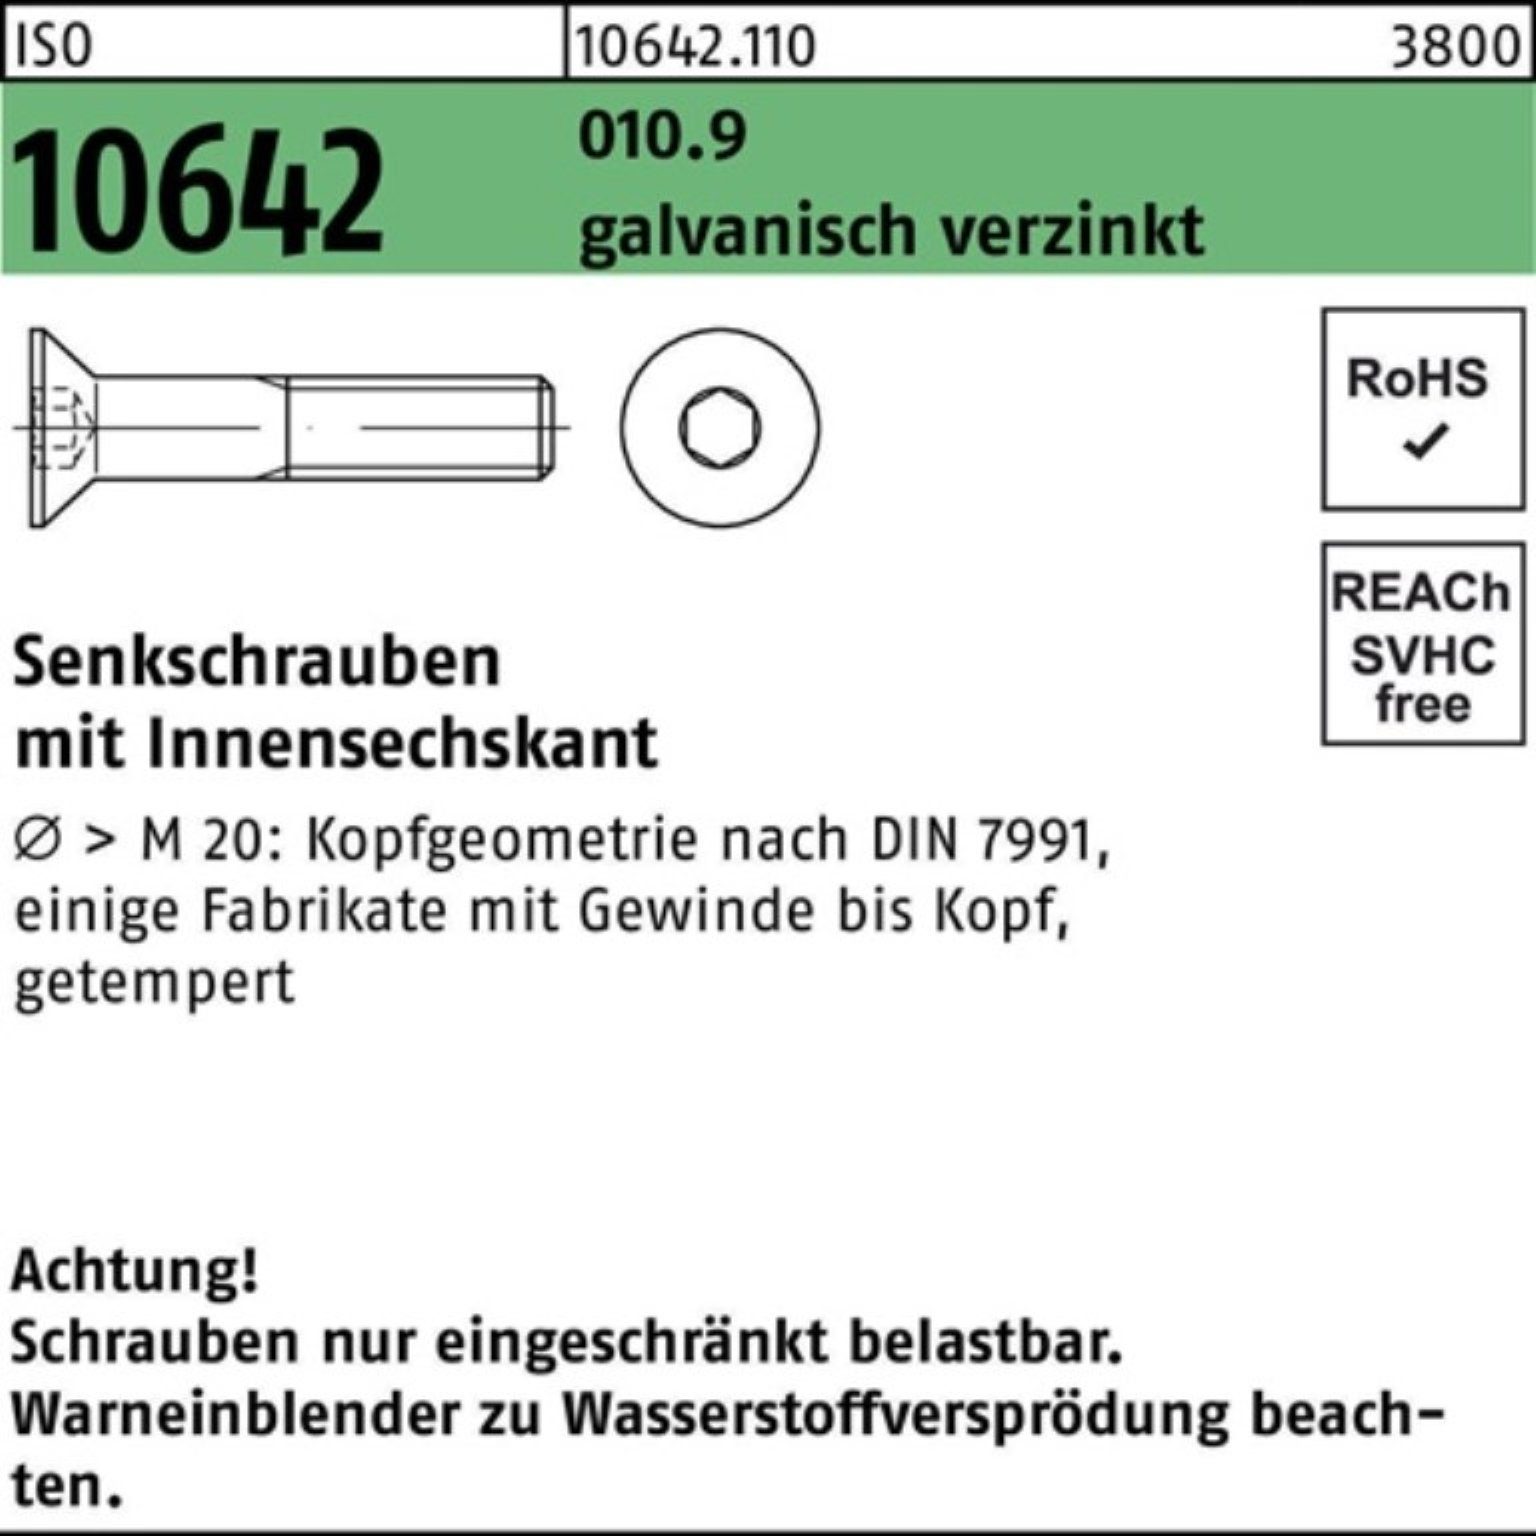 Reyher Senkschraube 500er Pack Senkschraube ISO 10642 Innen-6kt M4x 14 010.9 galv.verz. 50